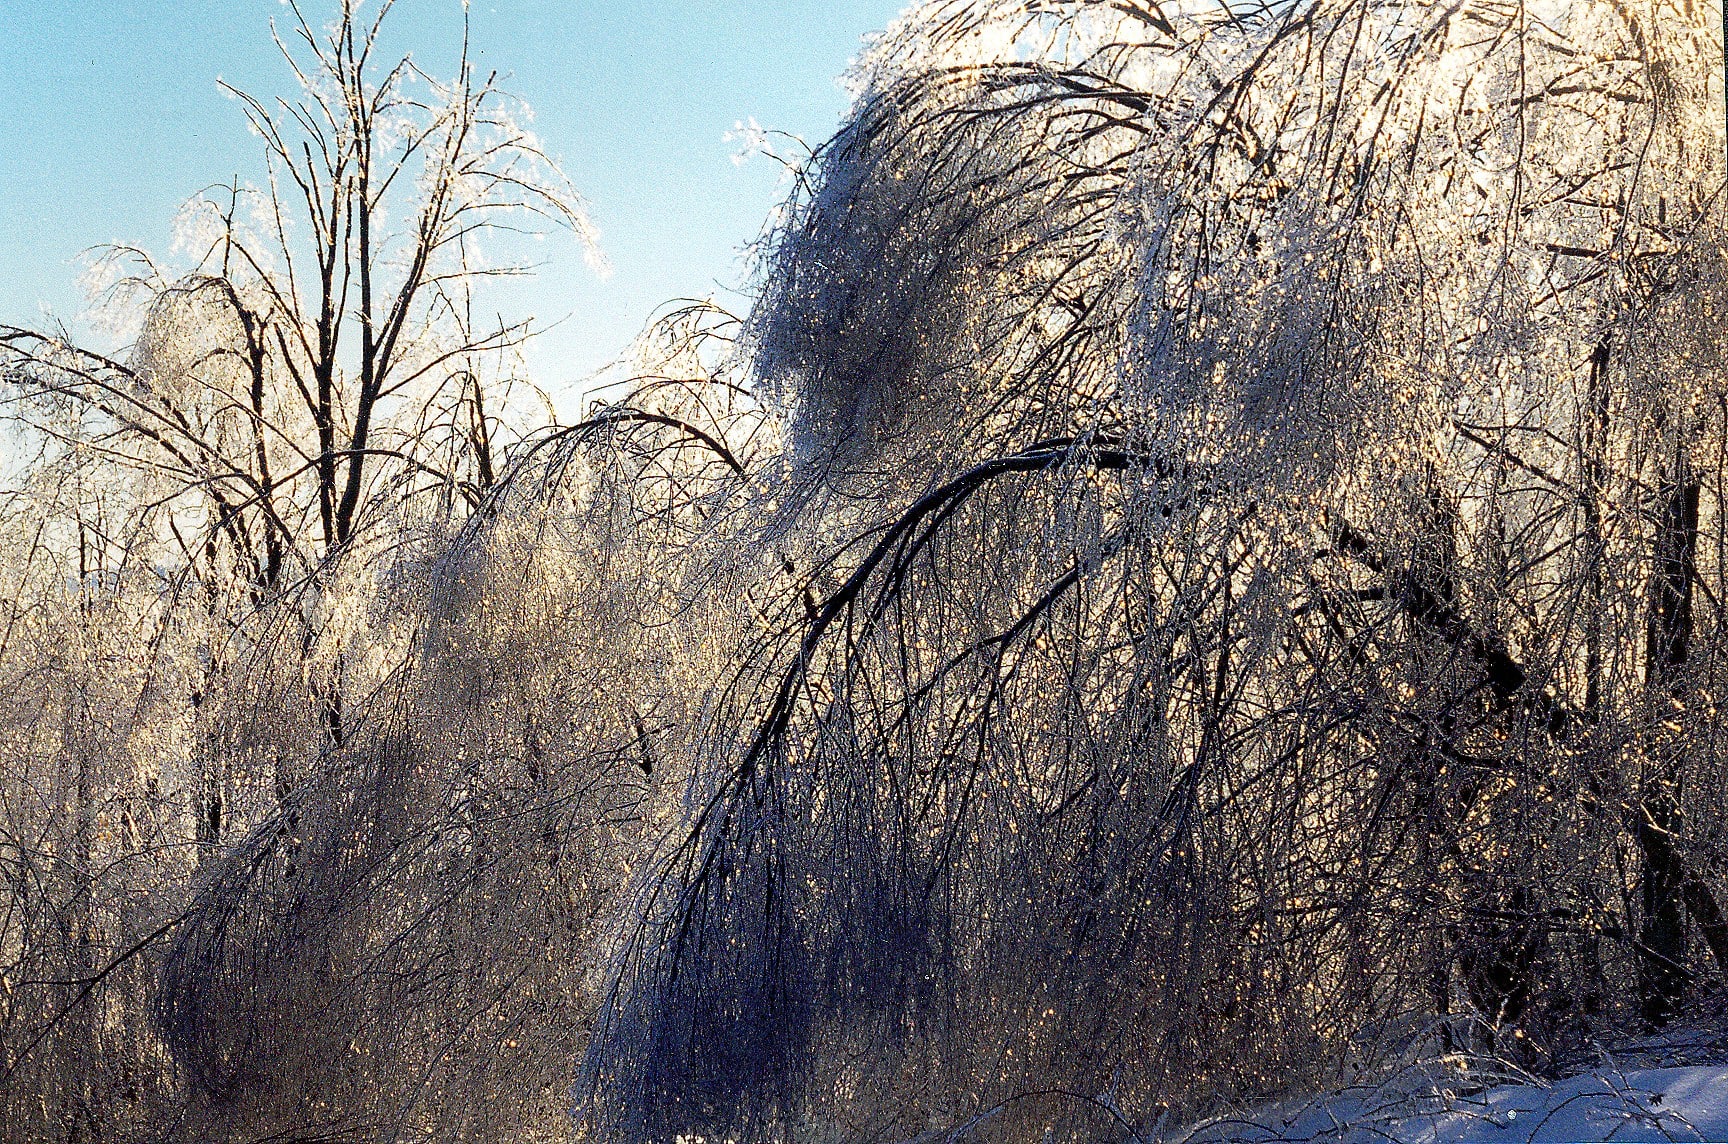 1998 Ice Storm at Hubbard Brook. Photo: Jennifer Pett-Ridge